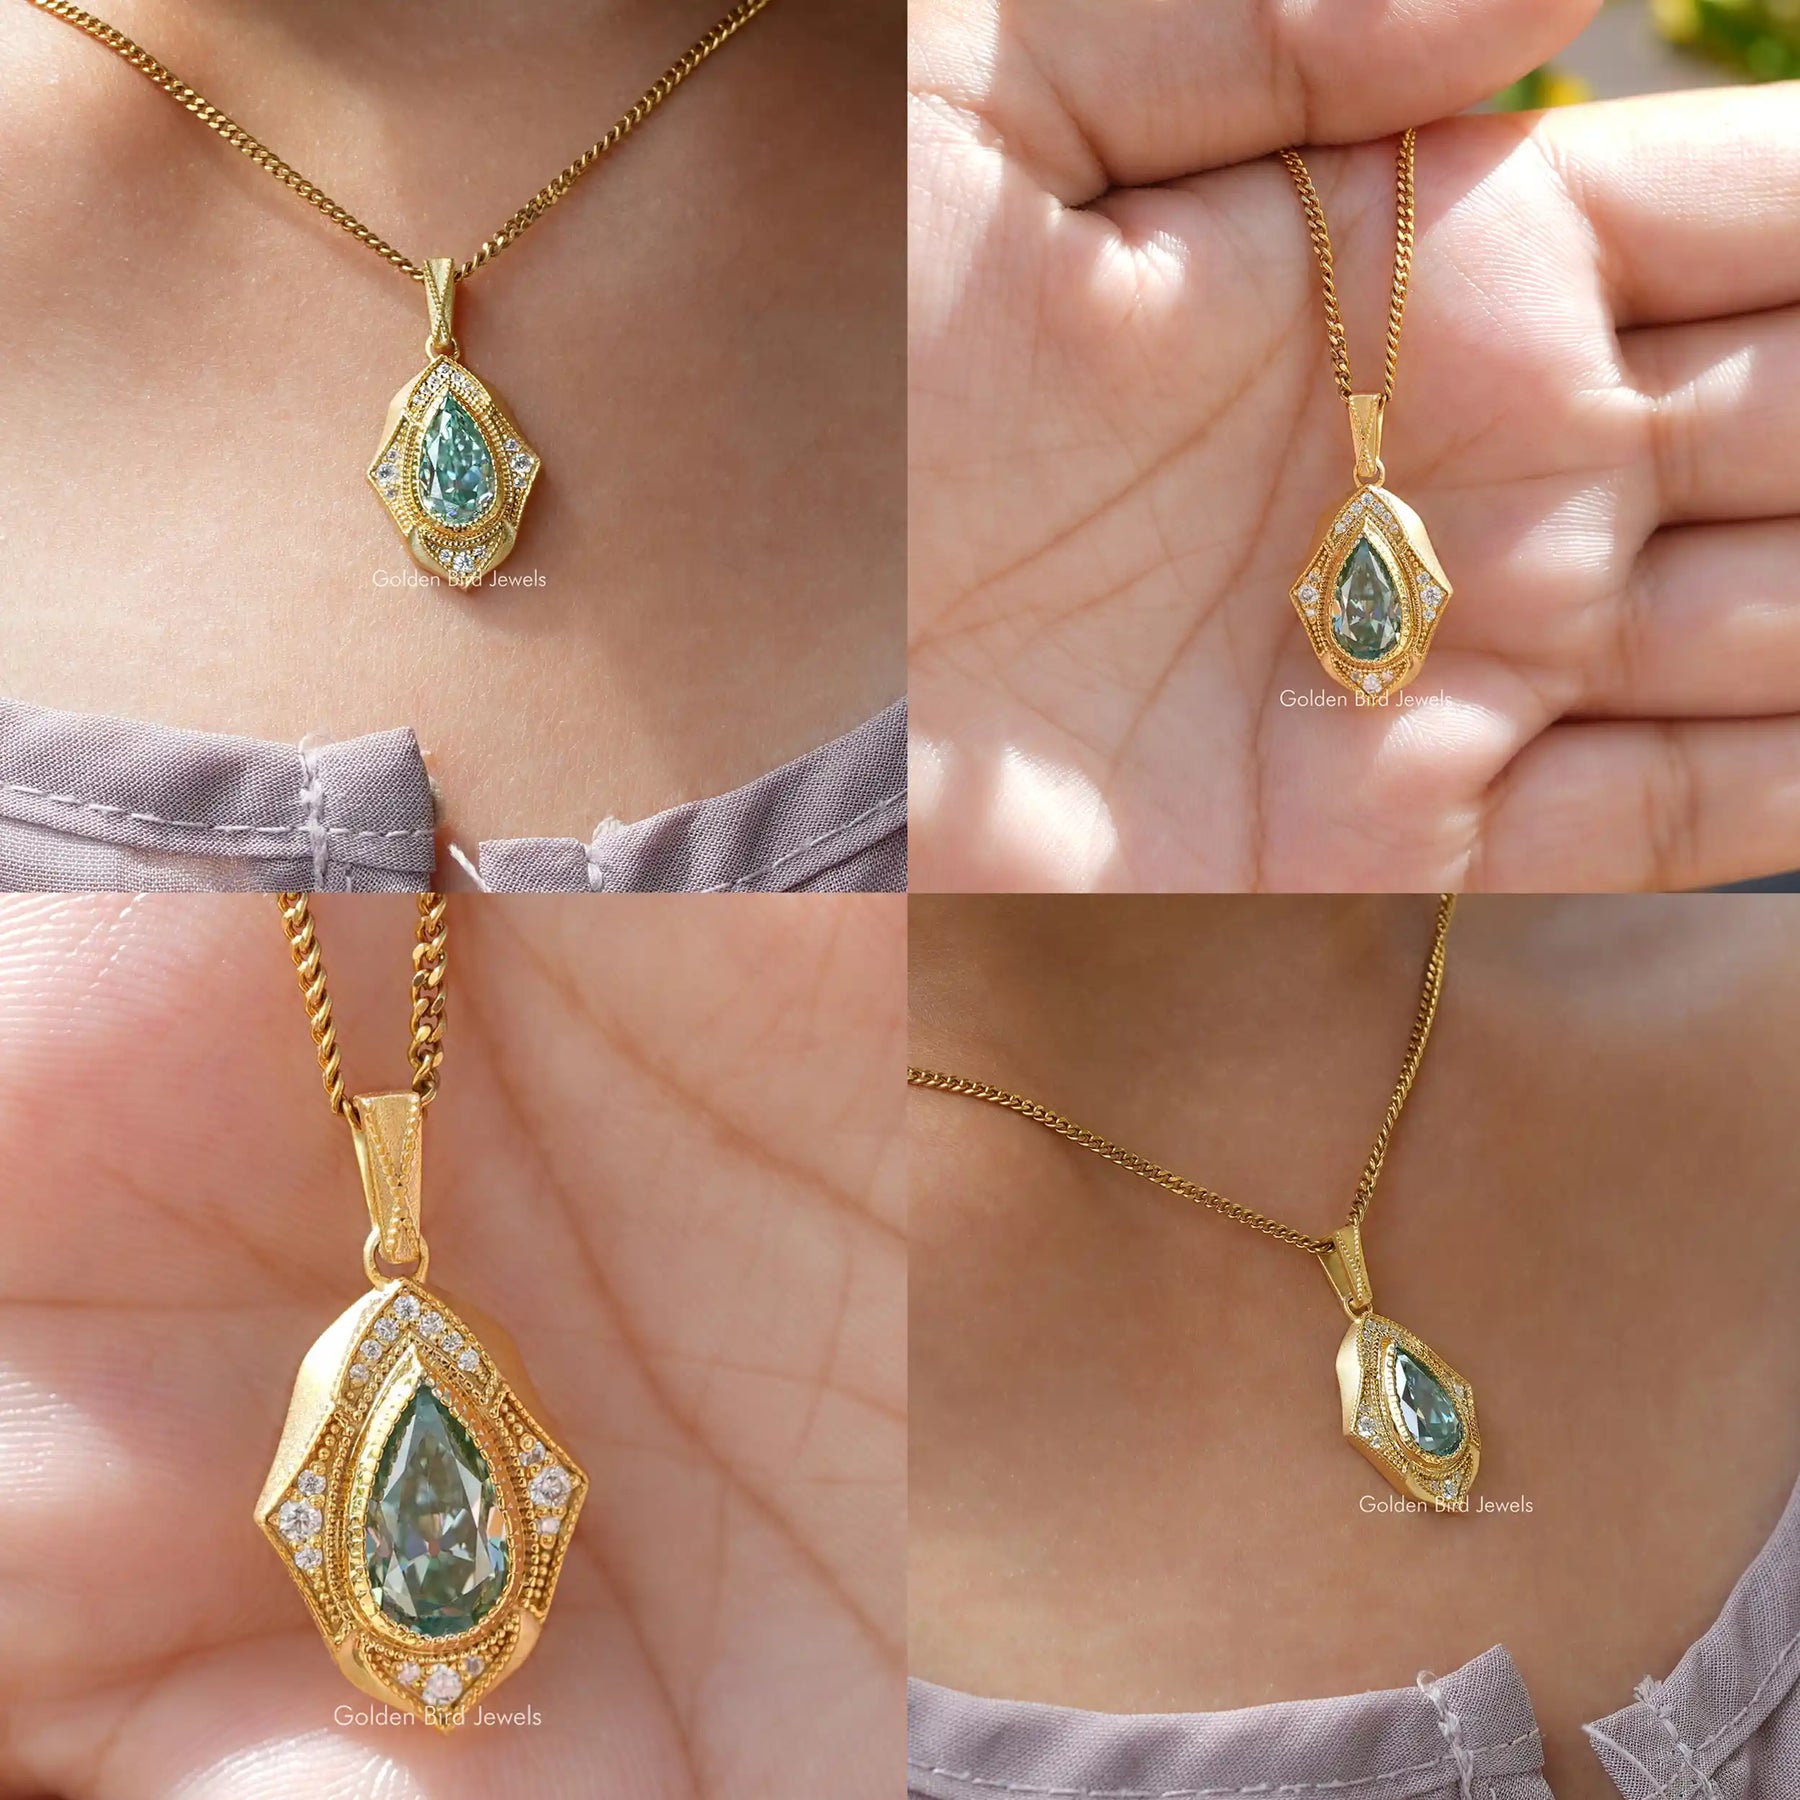 [Collage of moissanite pear cut moissanite pendant]-[Golden Bird Jewels]